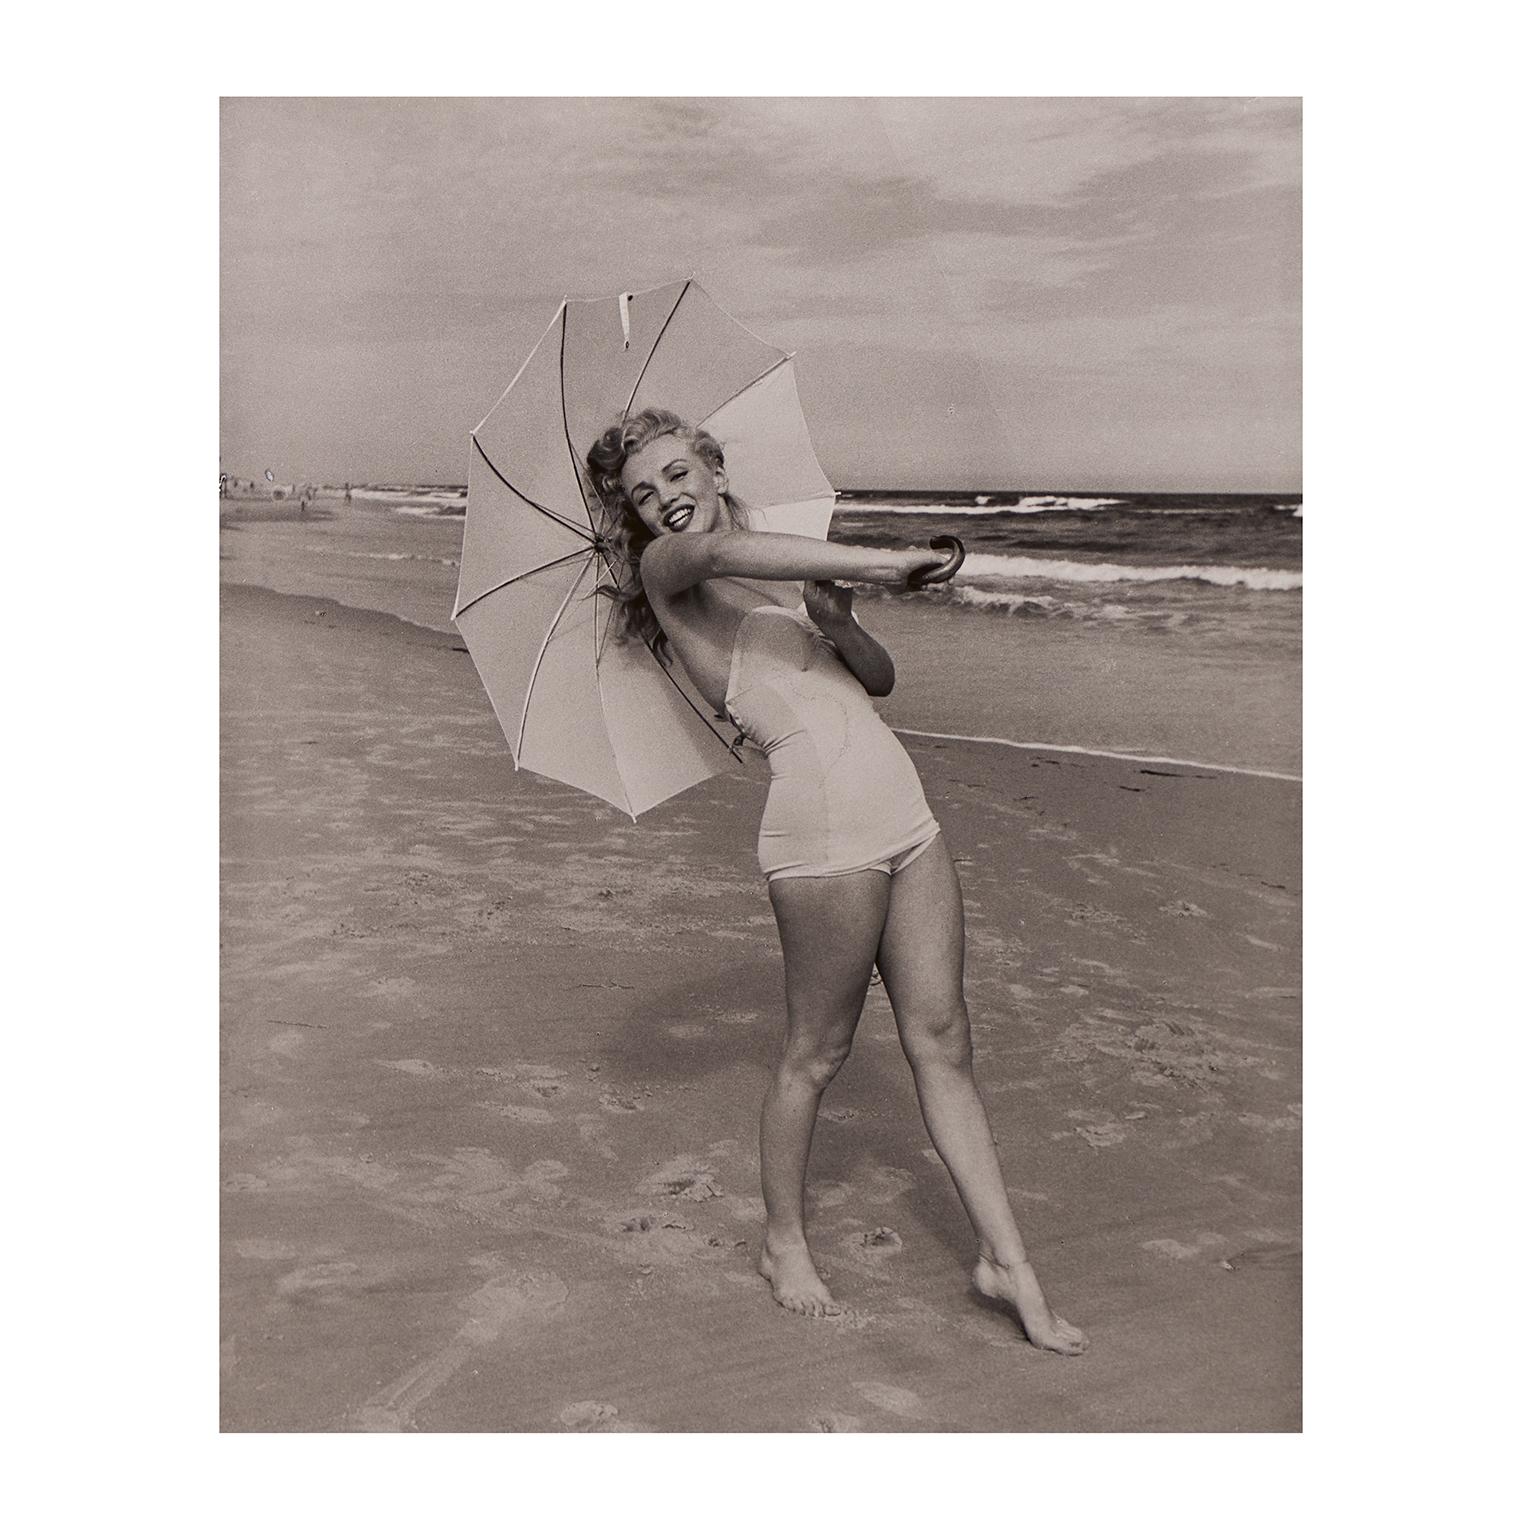 Andre de Dienes Portrait Print – Marilyn Monroe 'Umbrella Girl on Beach' by André de Dienes - Black and White